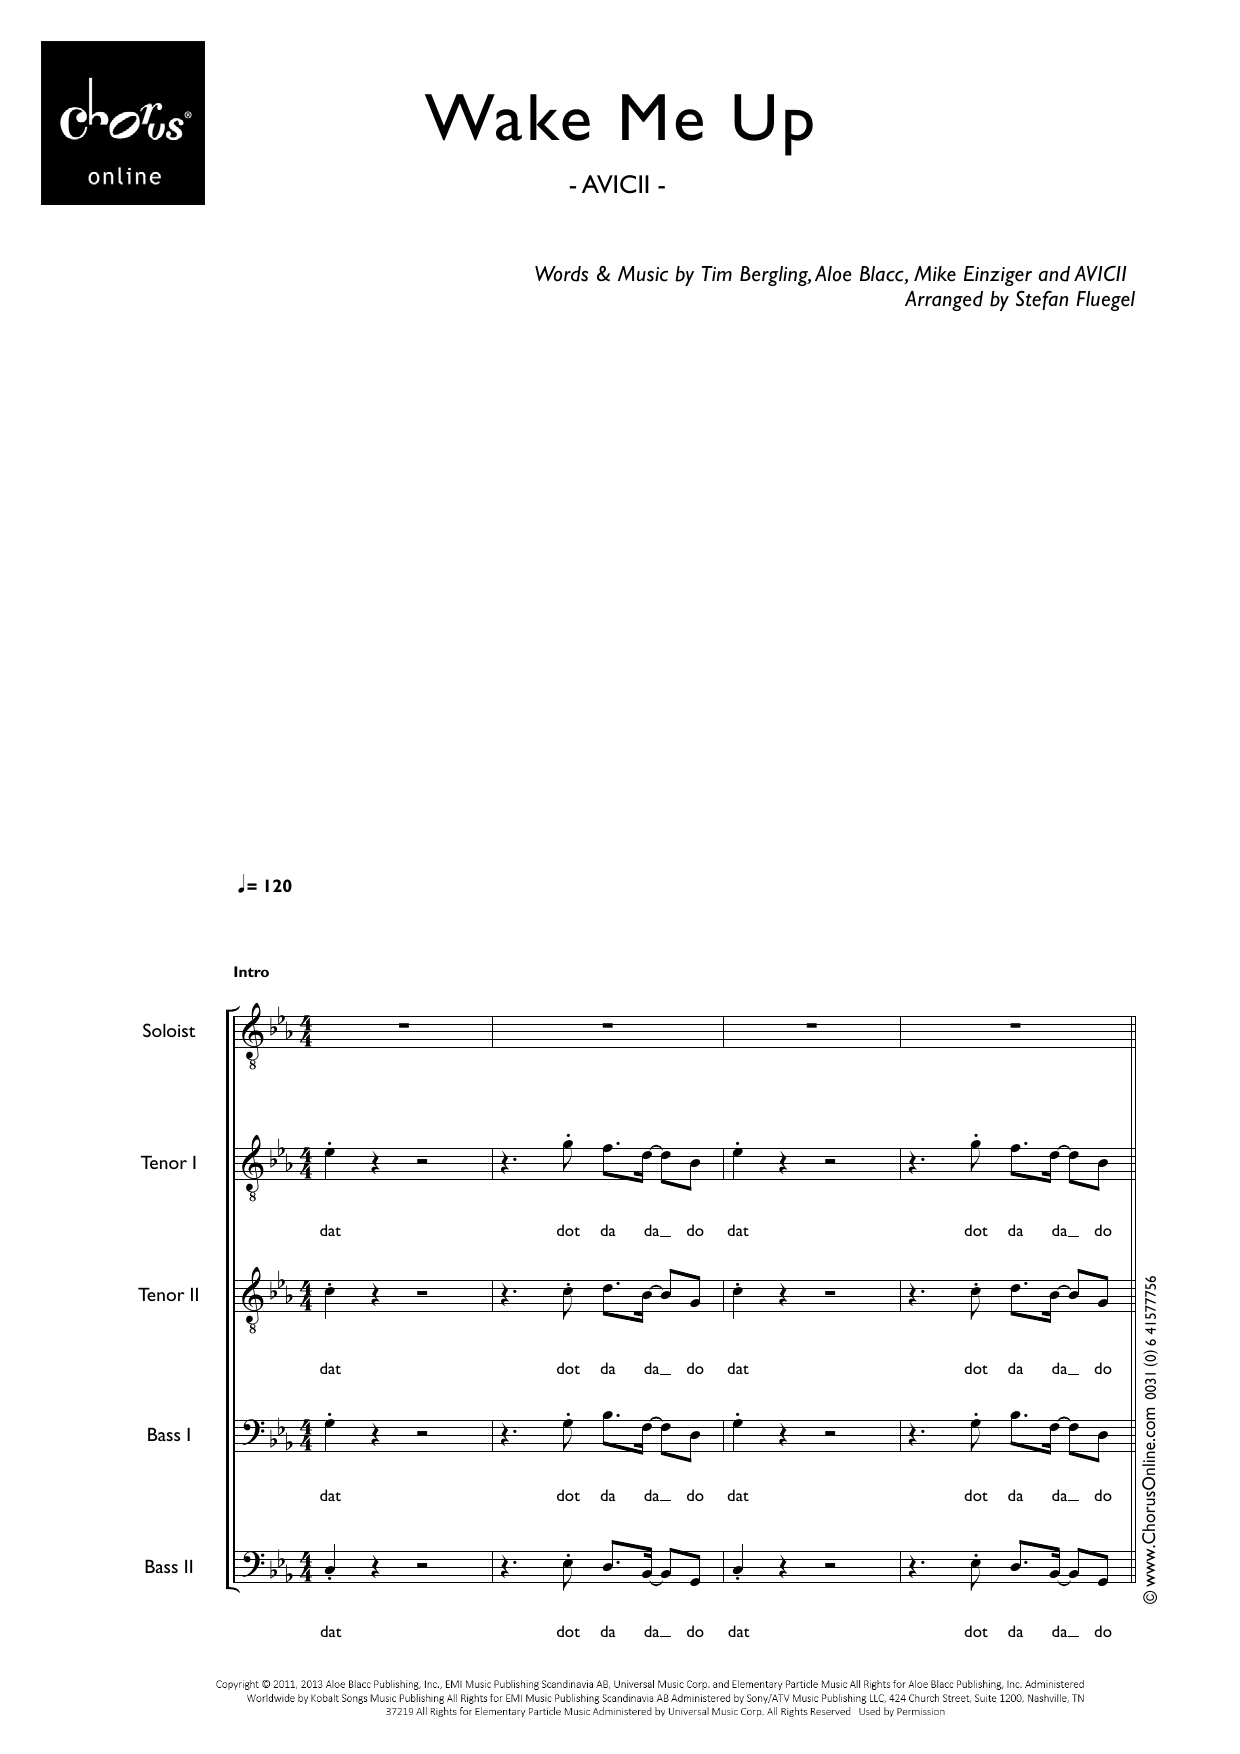 Avicii Wake Me Up (arr. Stefan Flügel) sheet music notes printable PDF score